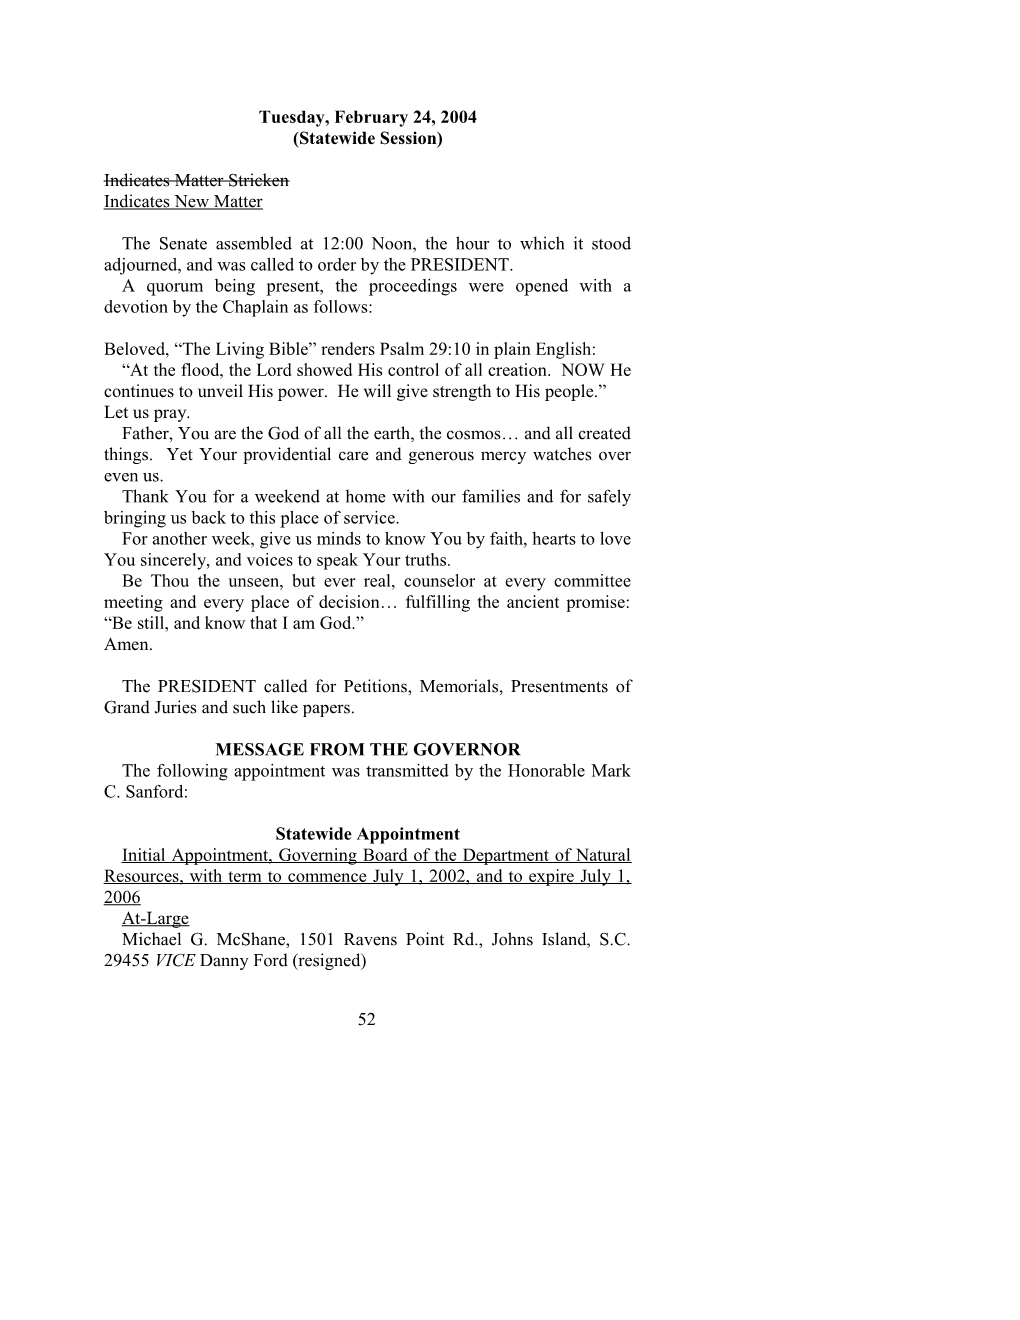 Senate Journal for Feb. 24, 2004 - South Carolina Legislature Online